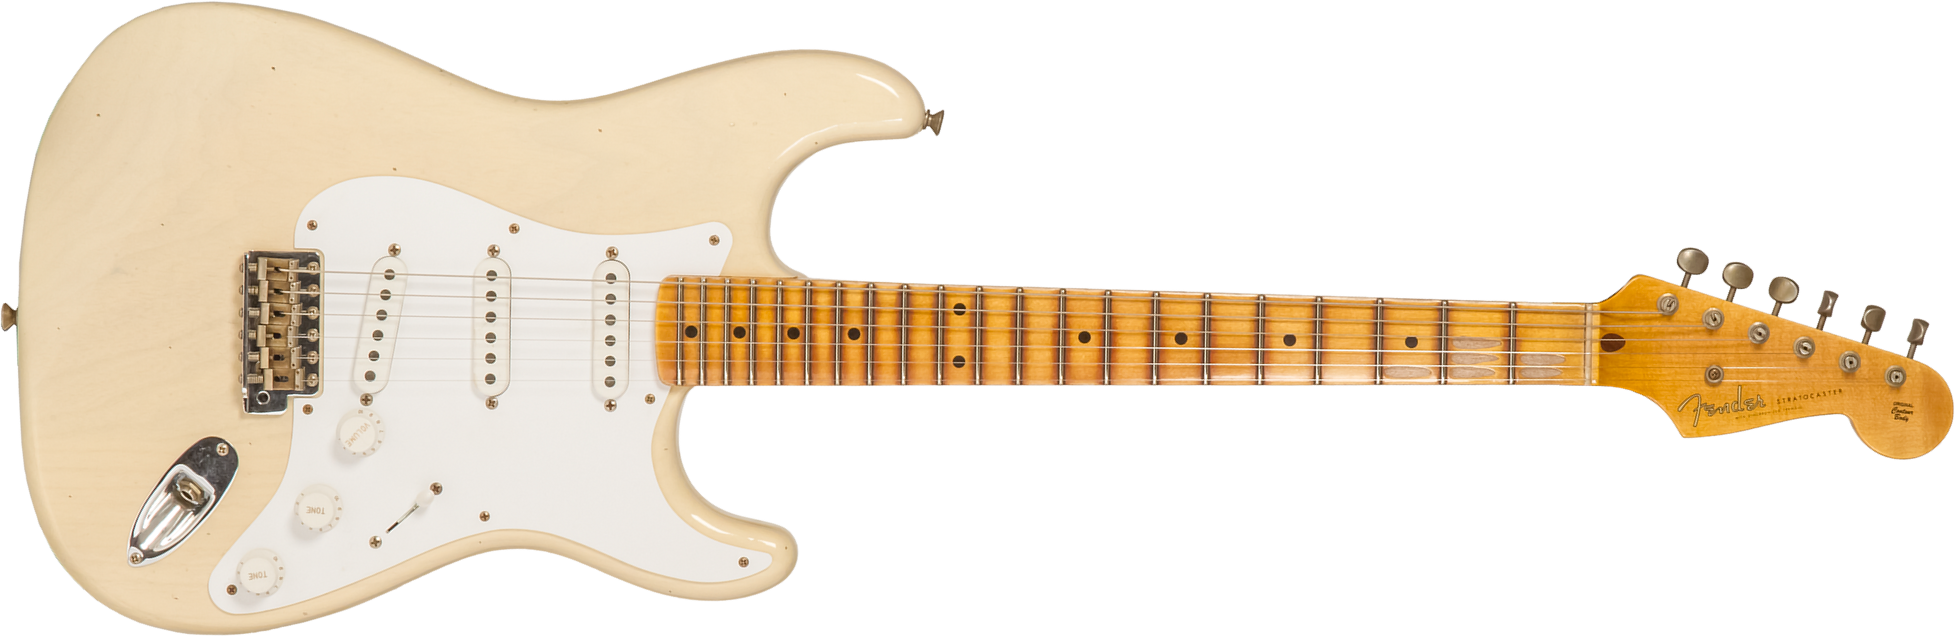 Fender Custom Shop Strat 1954 70th Anniv. 3s Trem Mn #xn4159 - Journeyman Relic Vintage Blonde - E-Gitarre in Str-Form - Main picture